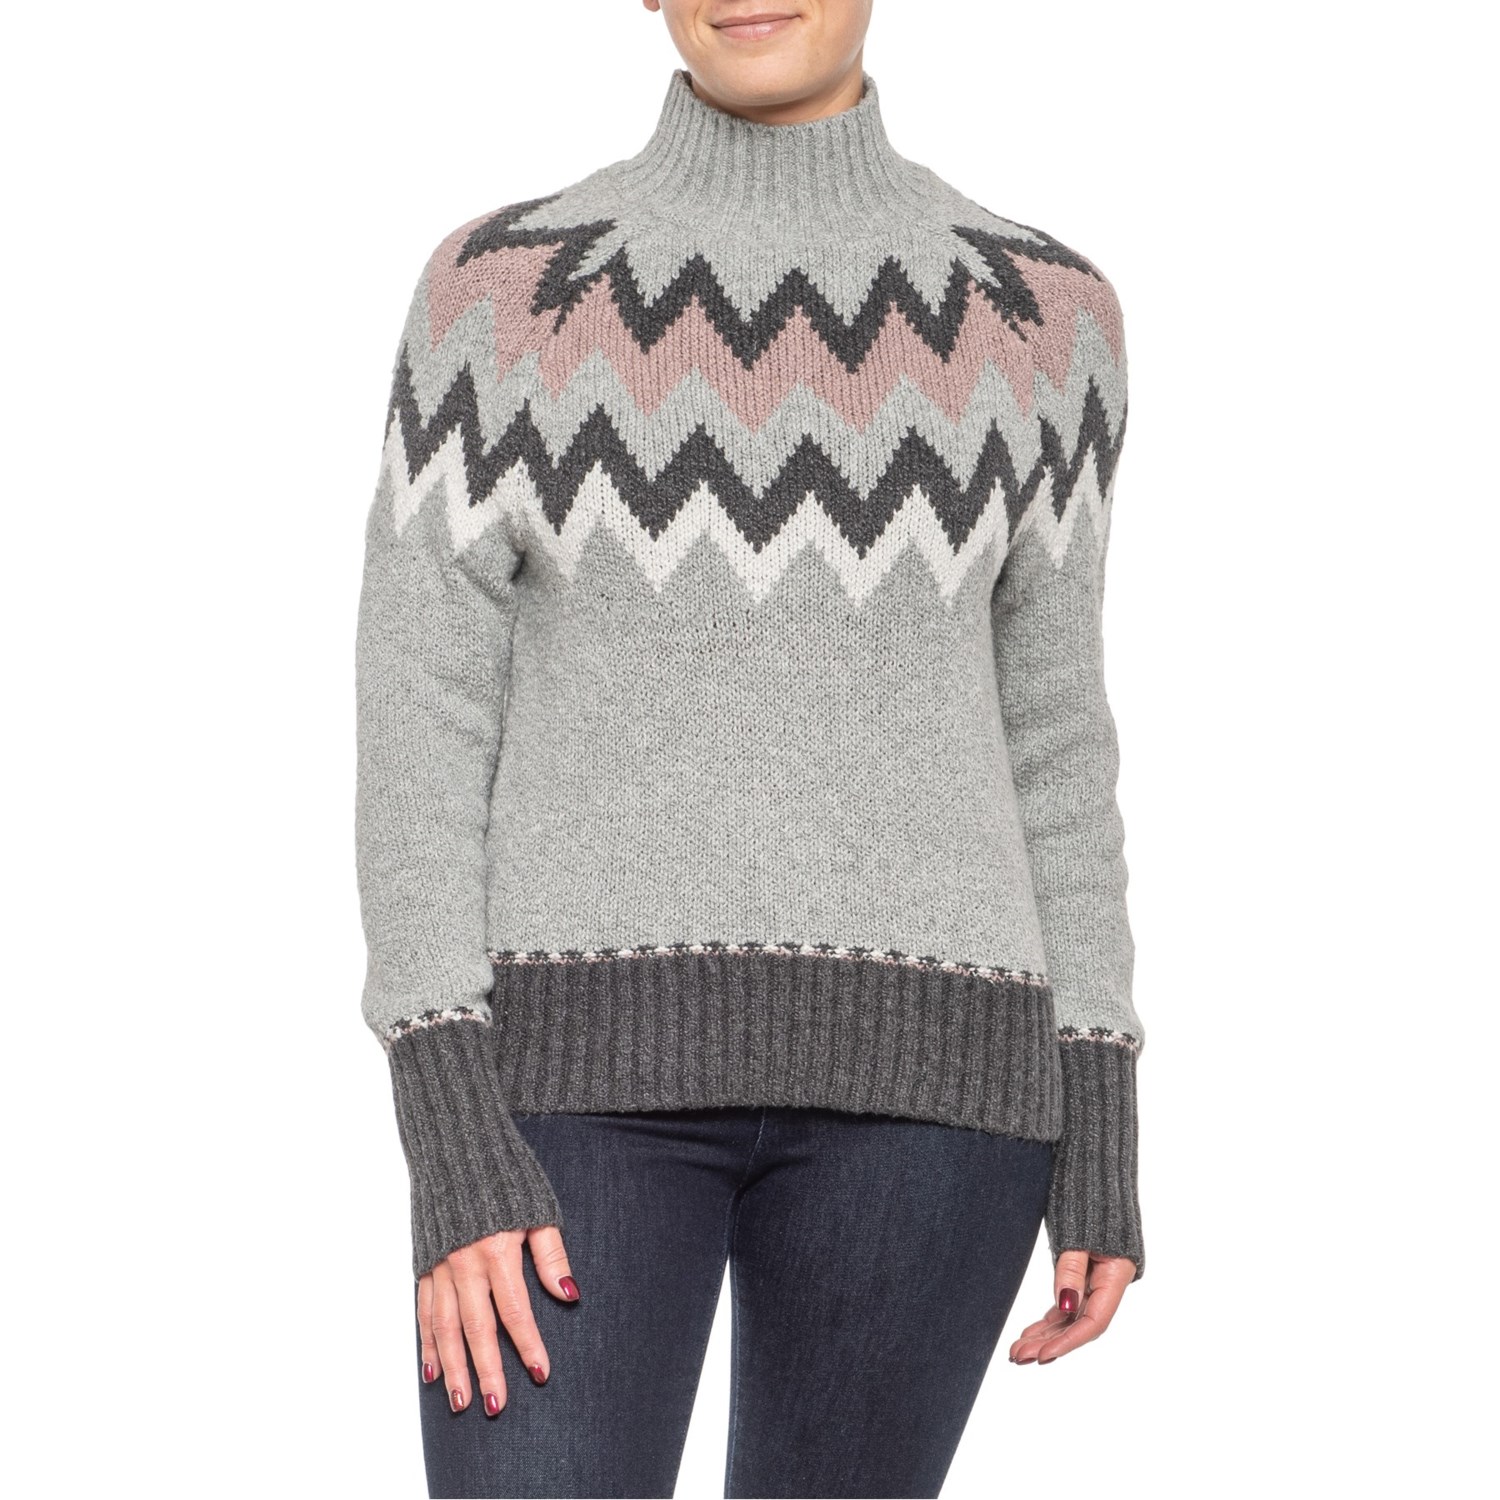 Aspen Grey-Pink Chevron Fair Isle Pullover Sweater (For Women) - Save 75%